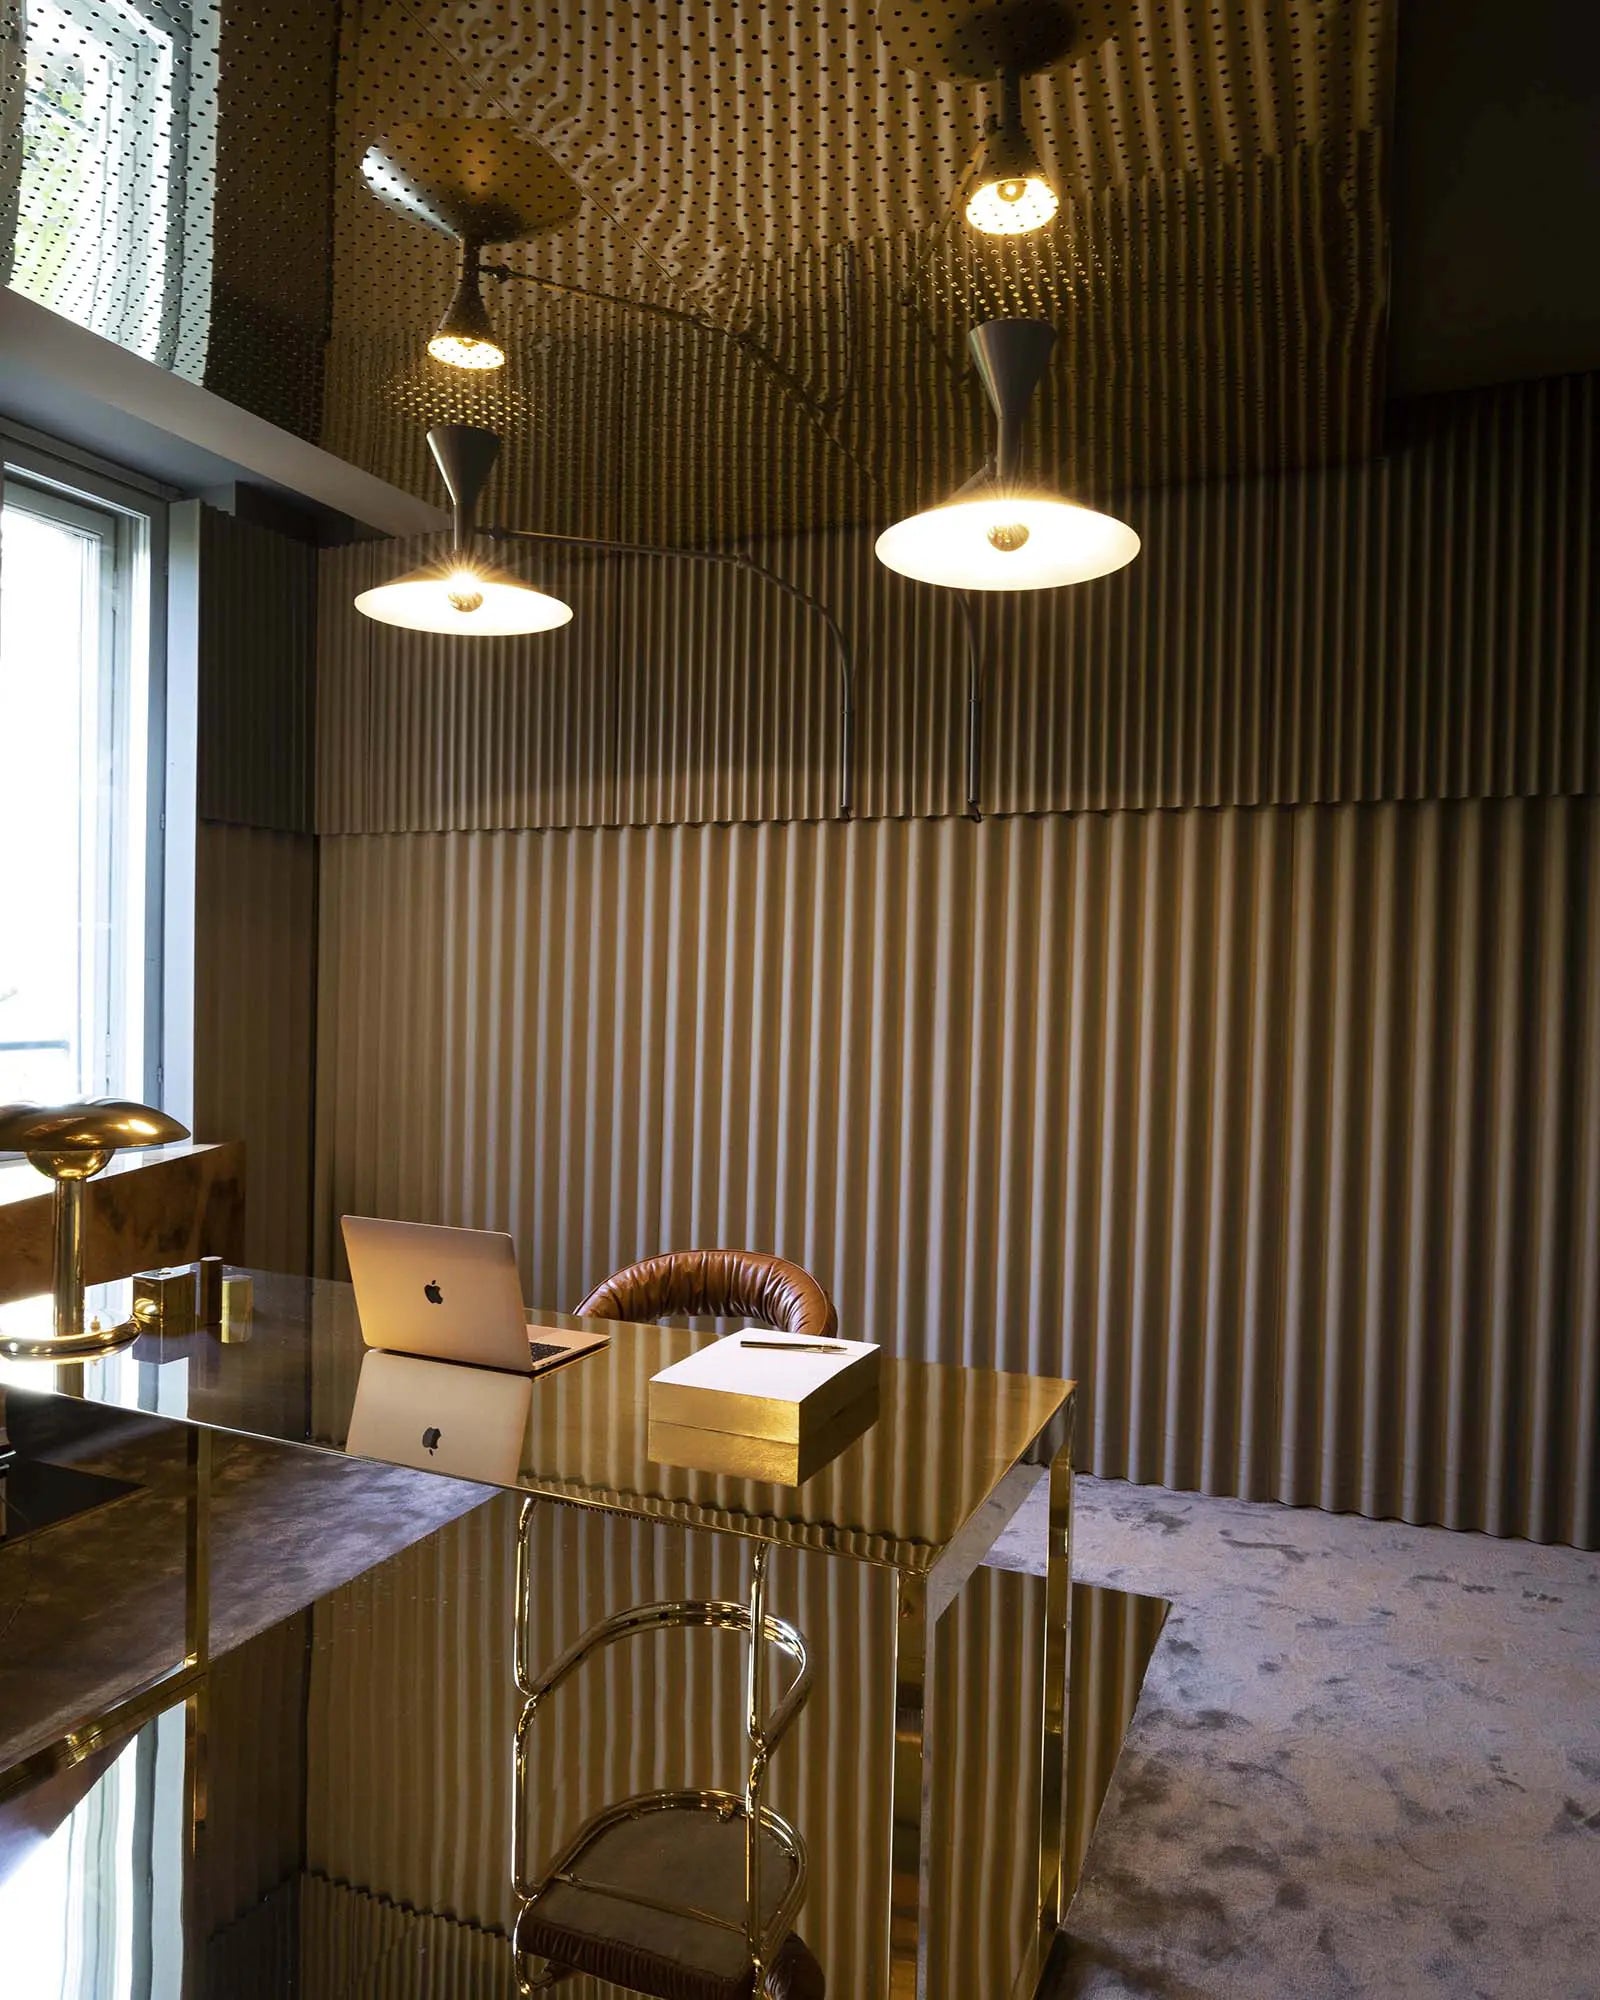 Lamp de Marseille iconic adjustable modern wall light in a studio above a desk